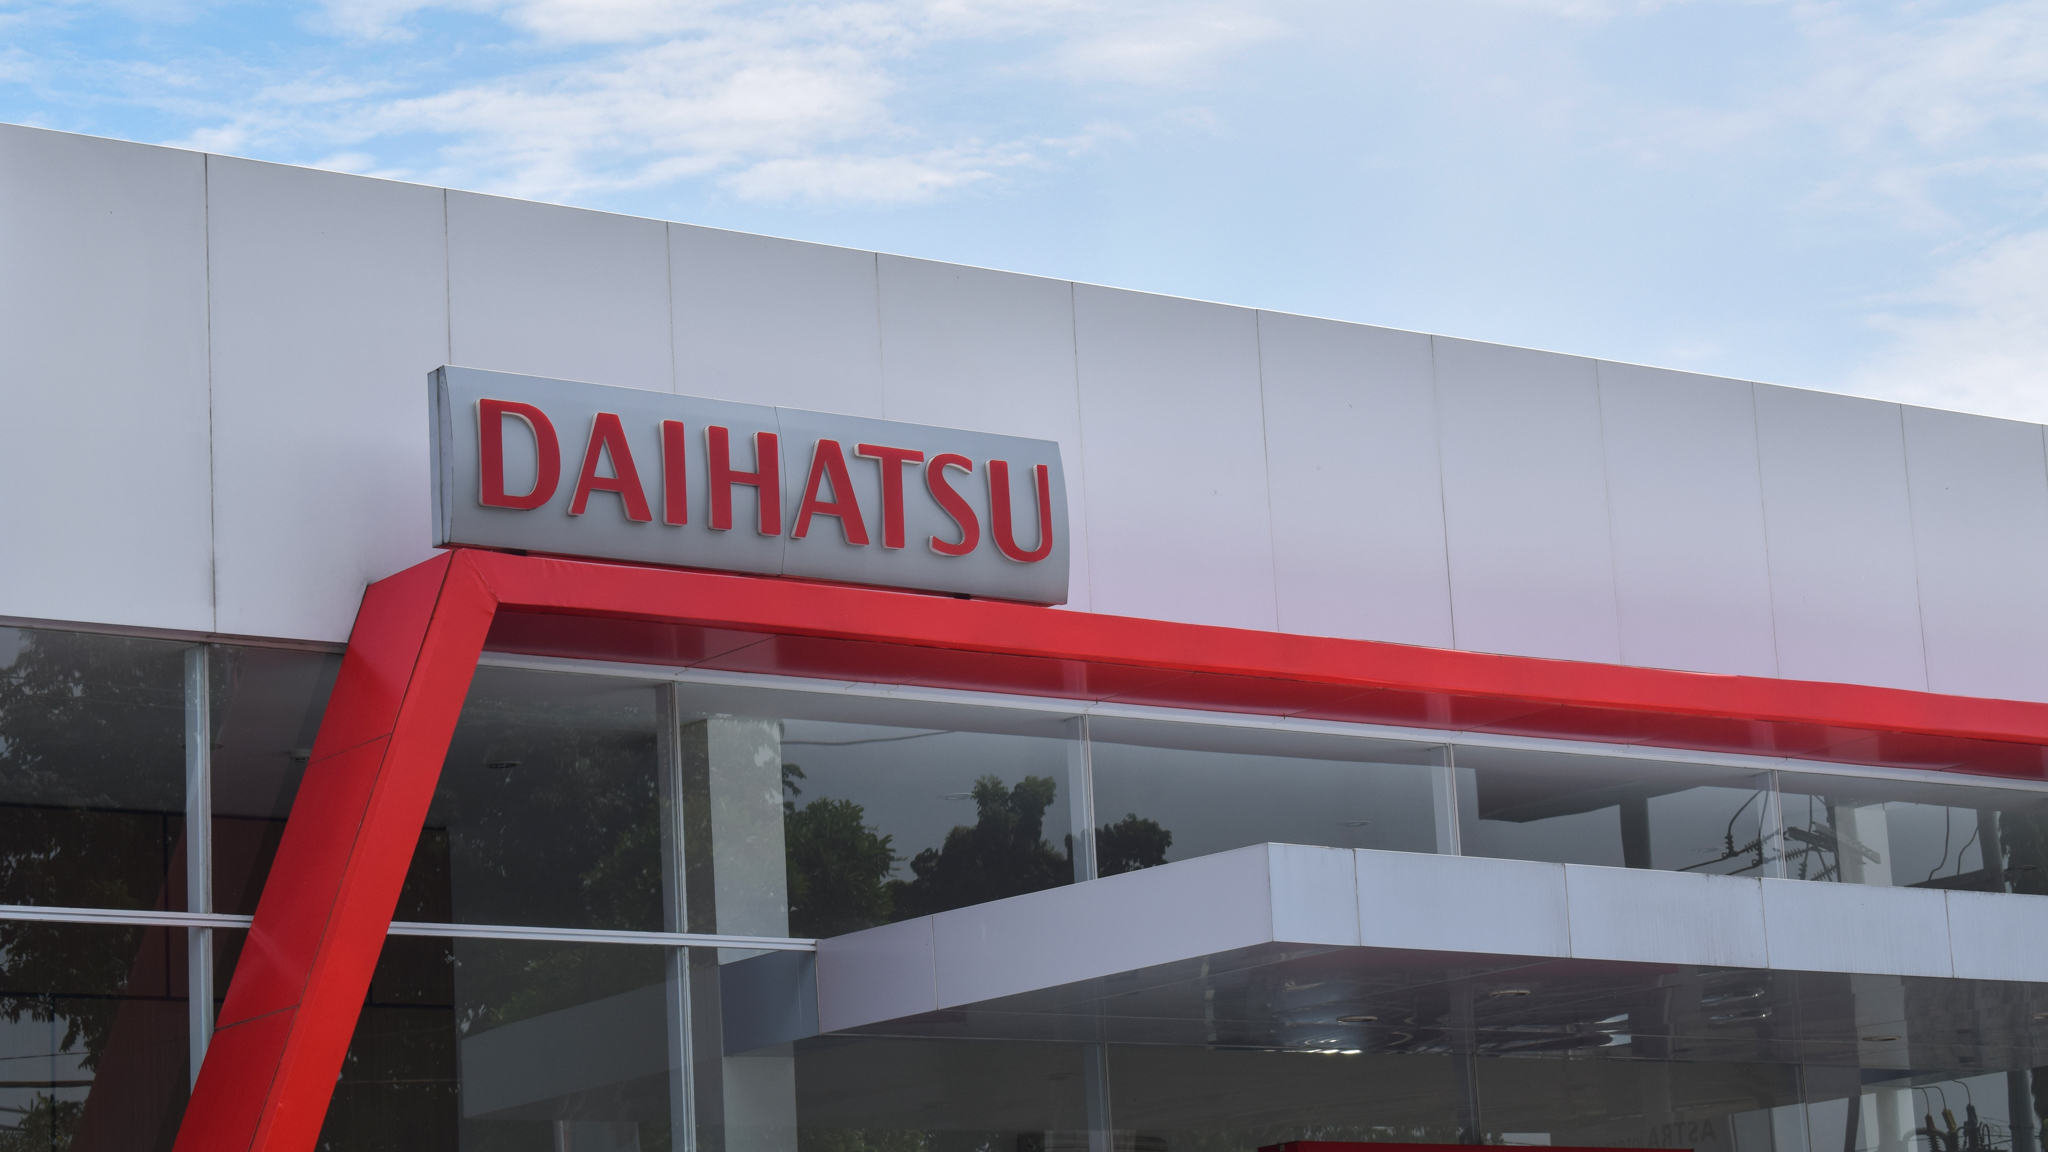 Daihatsu safety data manipulation